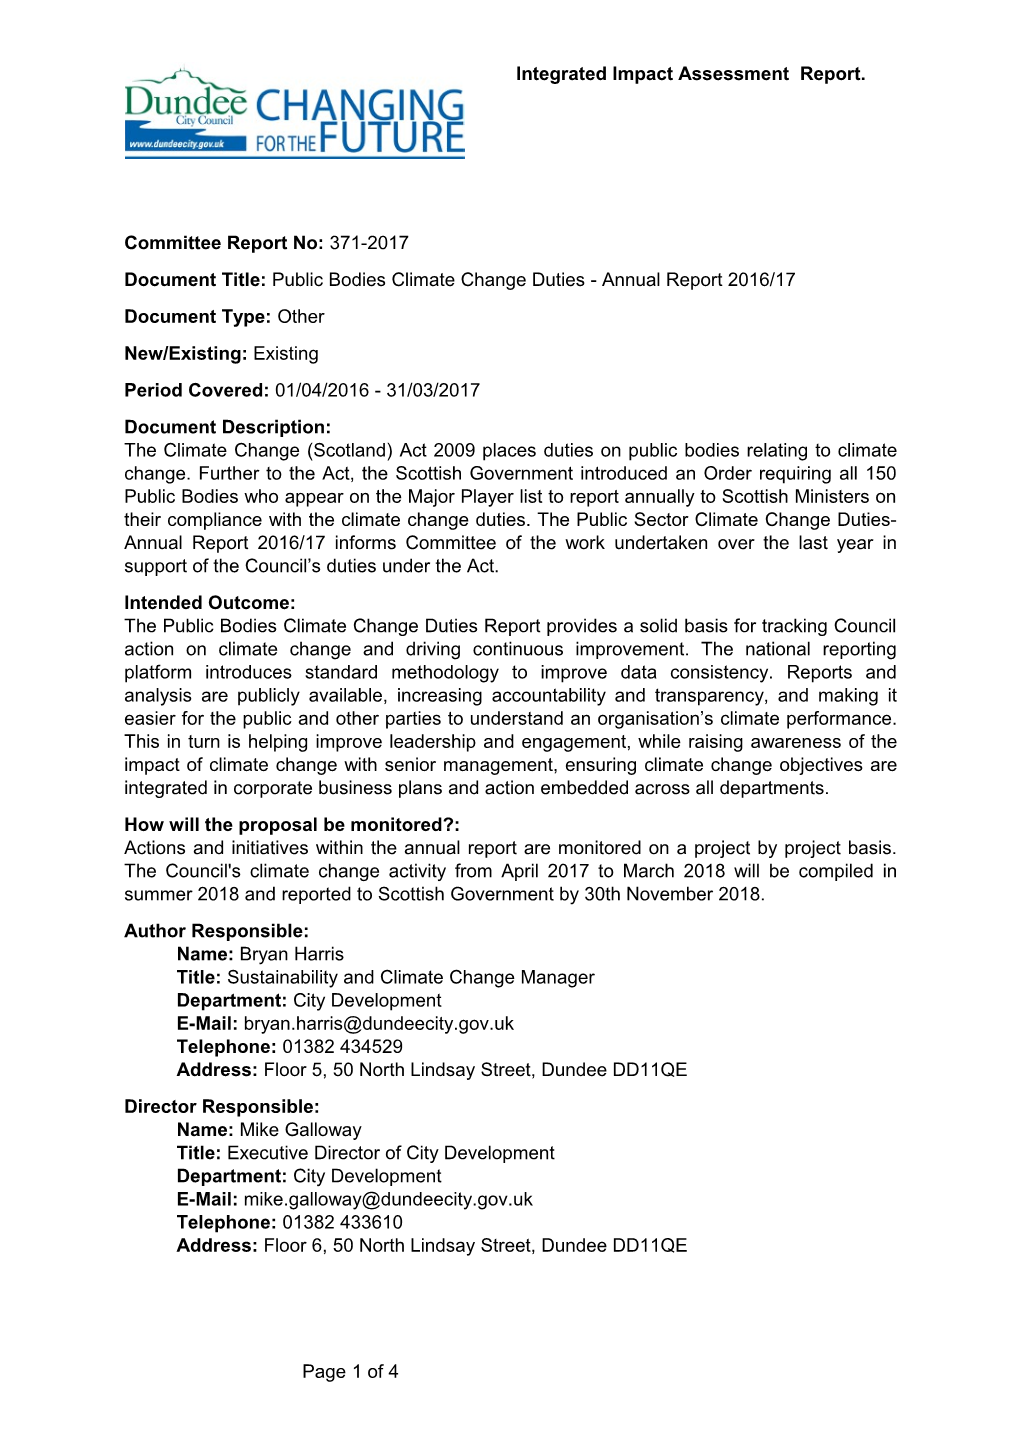 Document Title: Public Bodies Climate Change Duties - Annual Report 2016/17